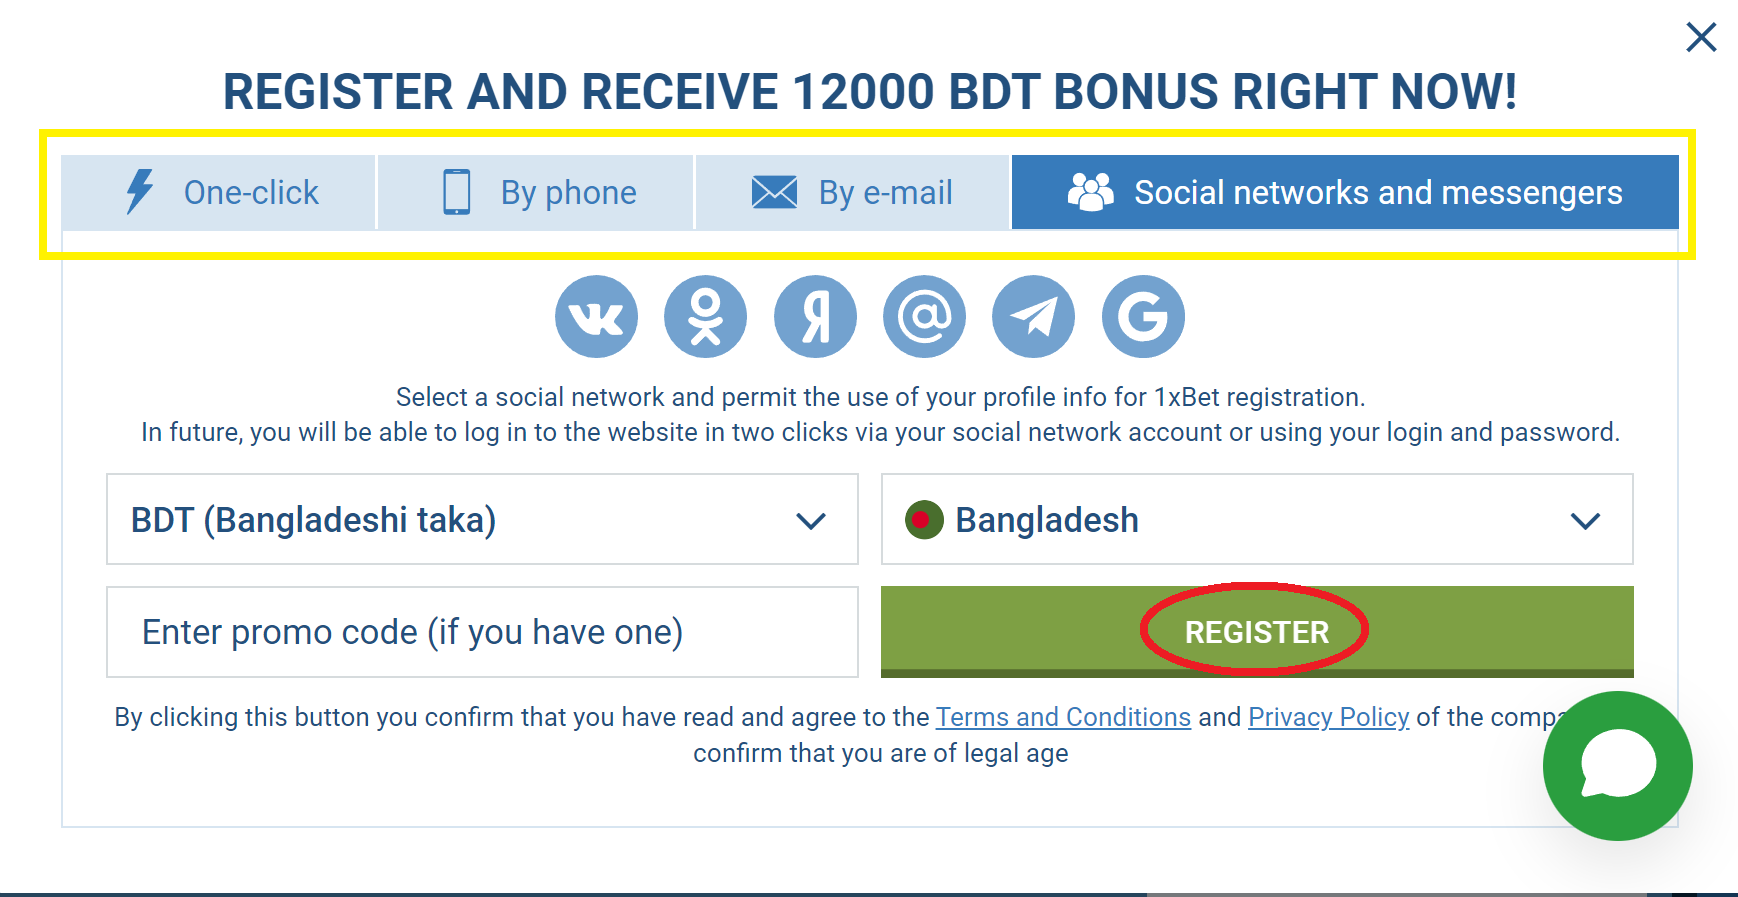 1xBet registration via social networks